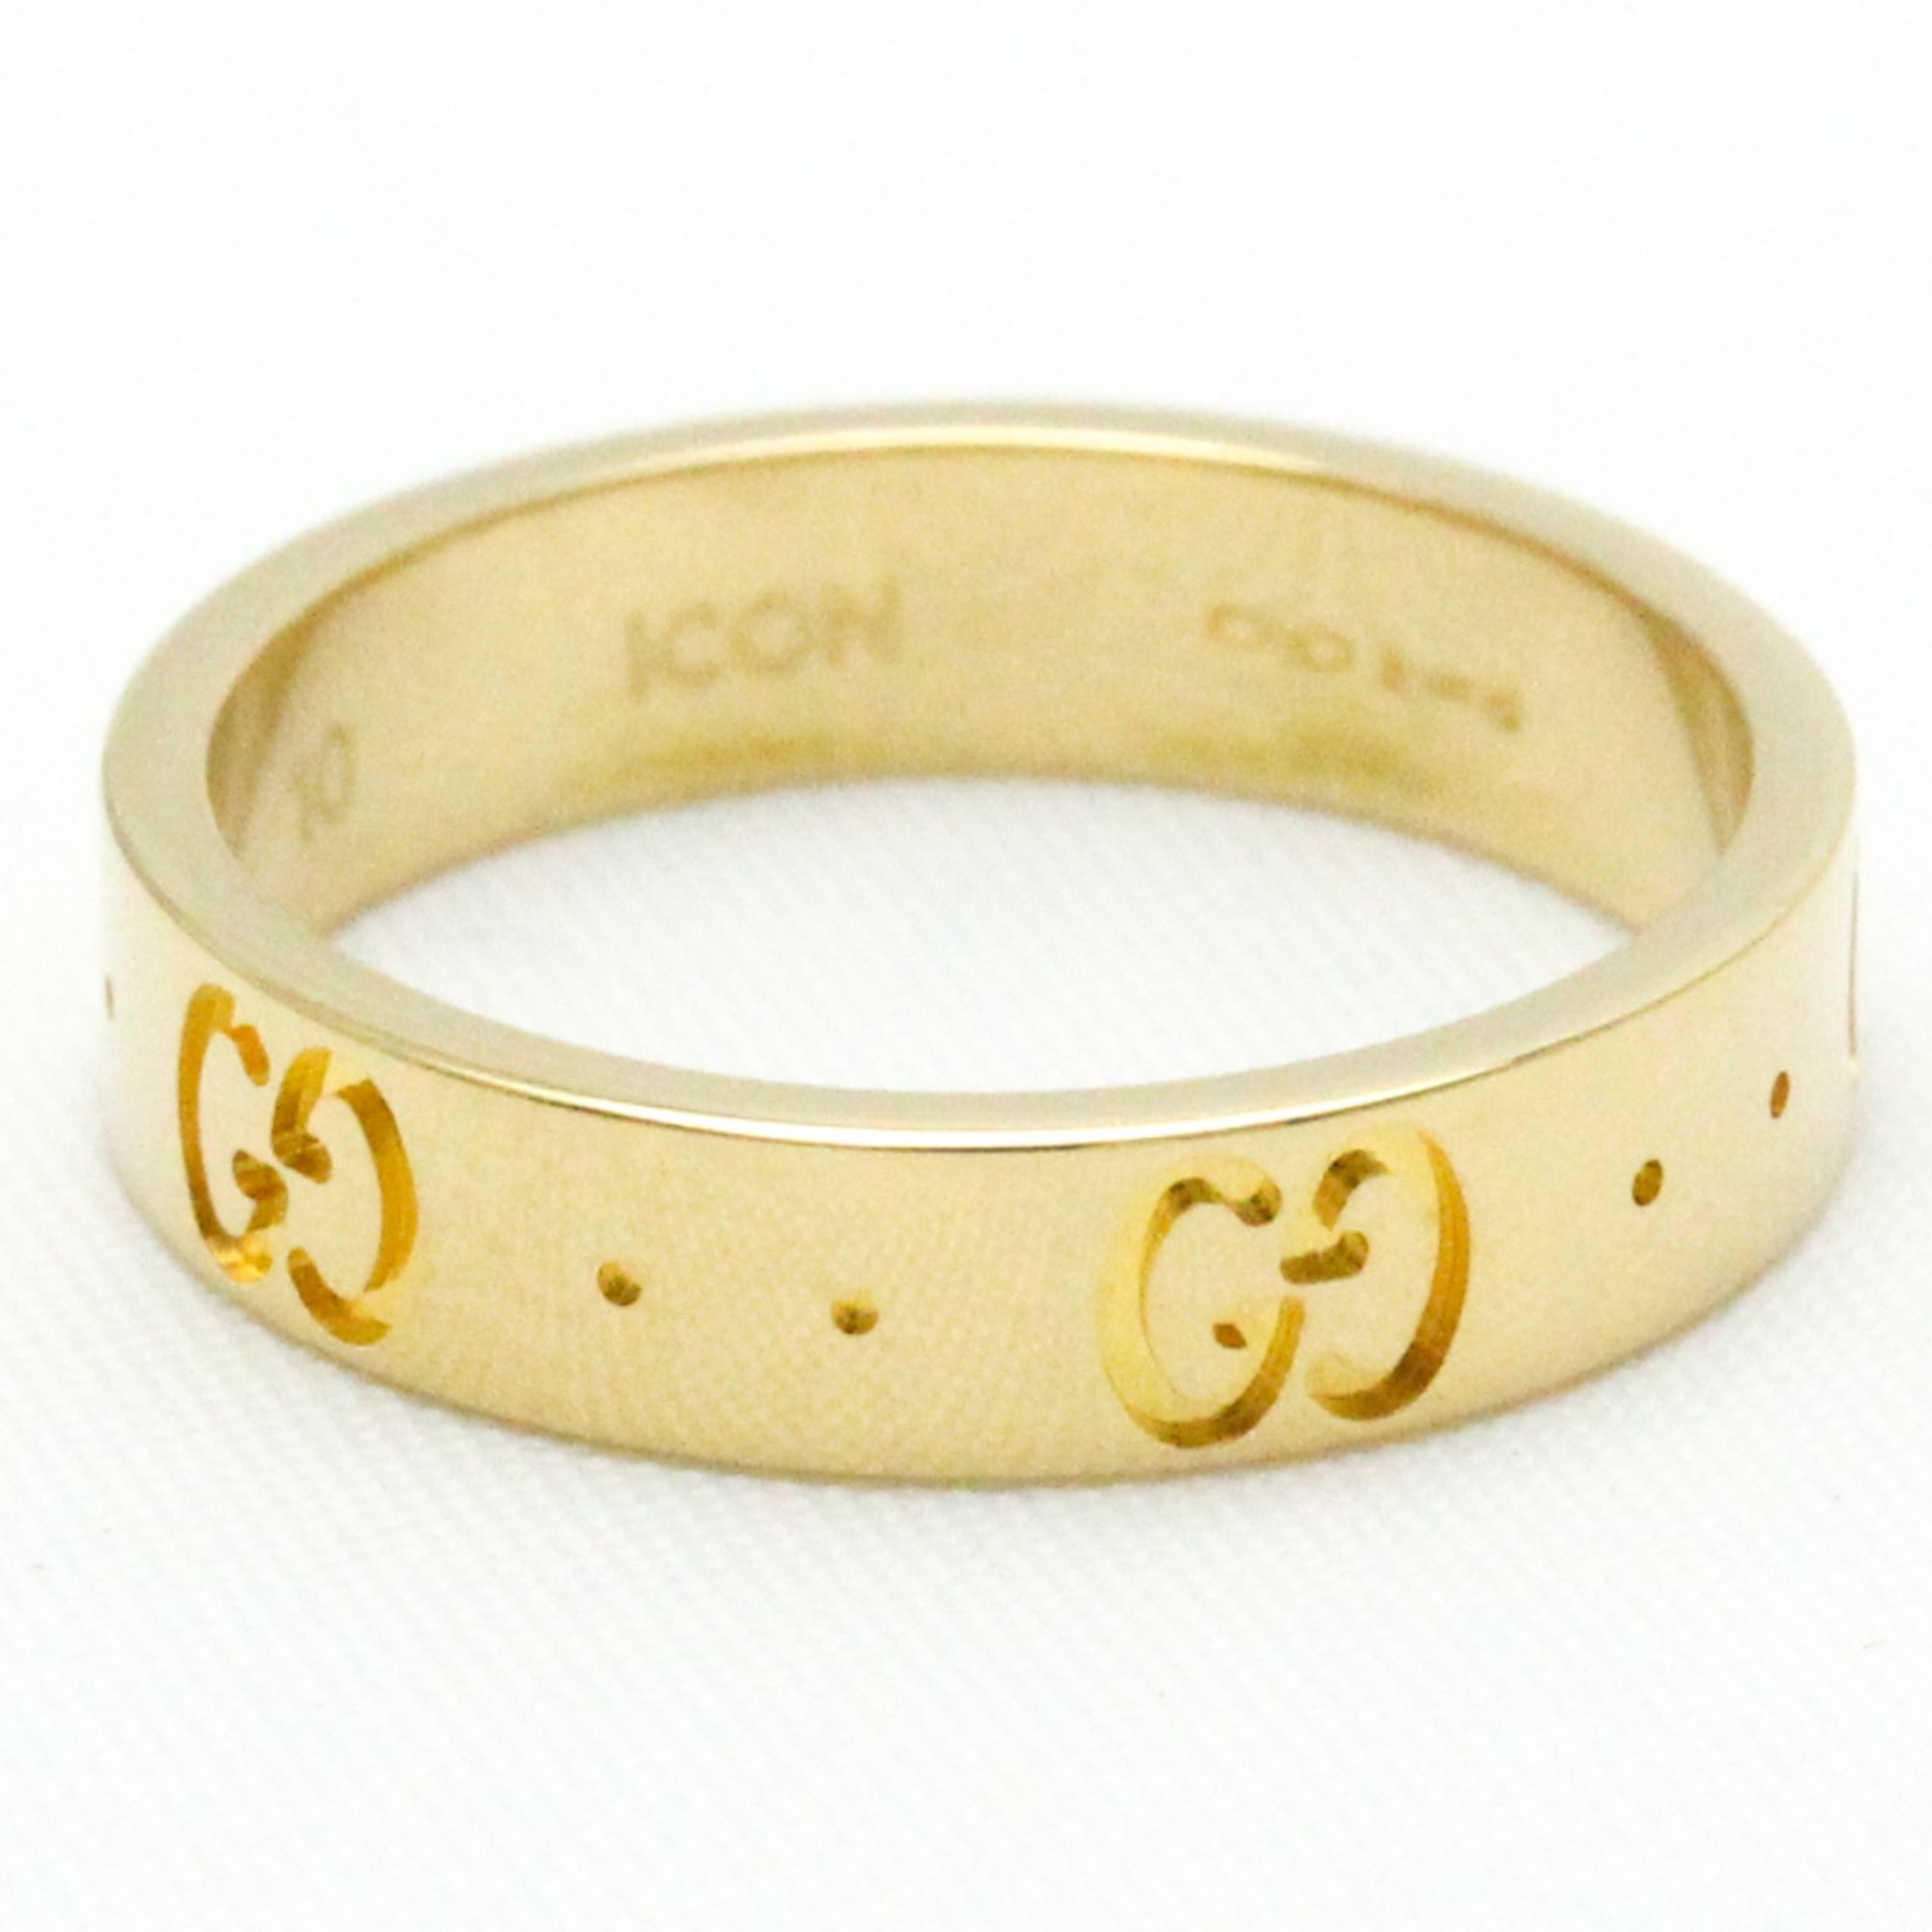 Gucci Icon Yellow Gold (18K) Fashion No Stone Band Ring Gold